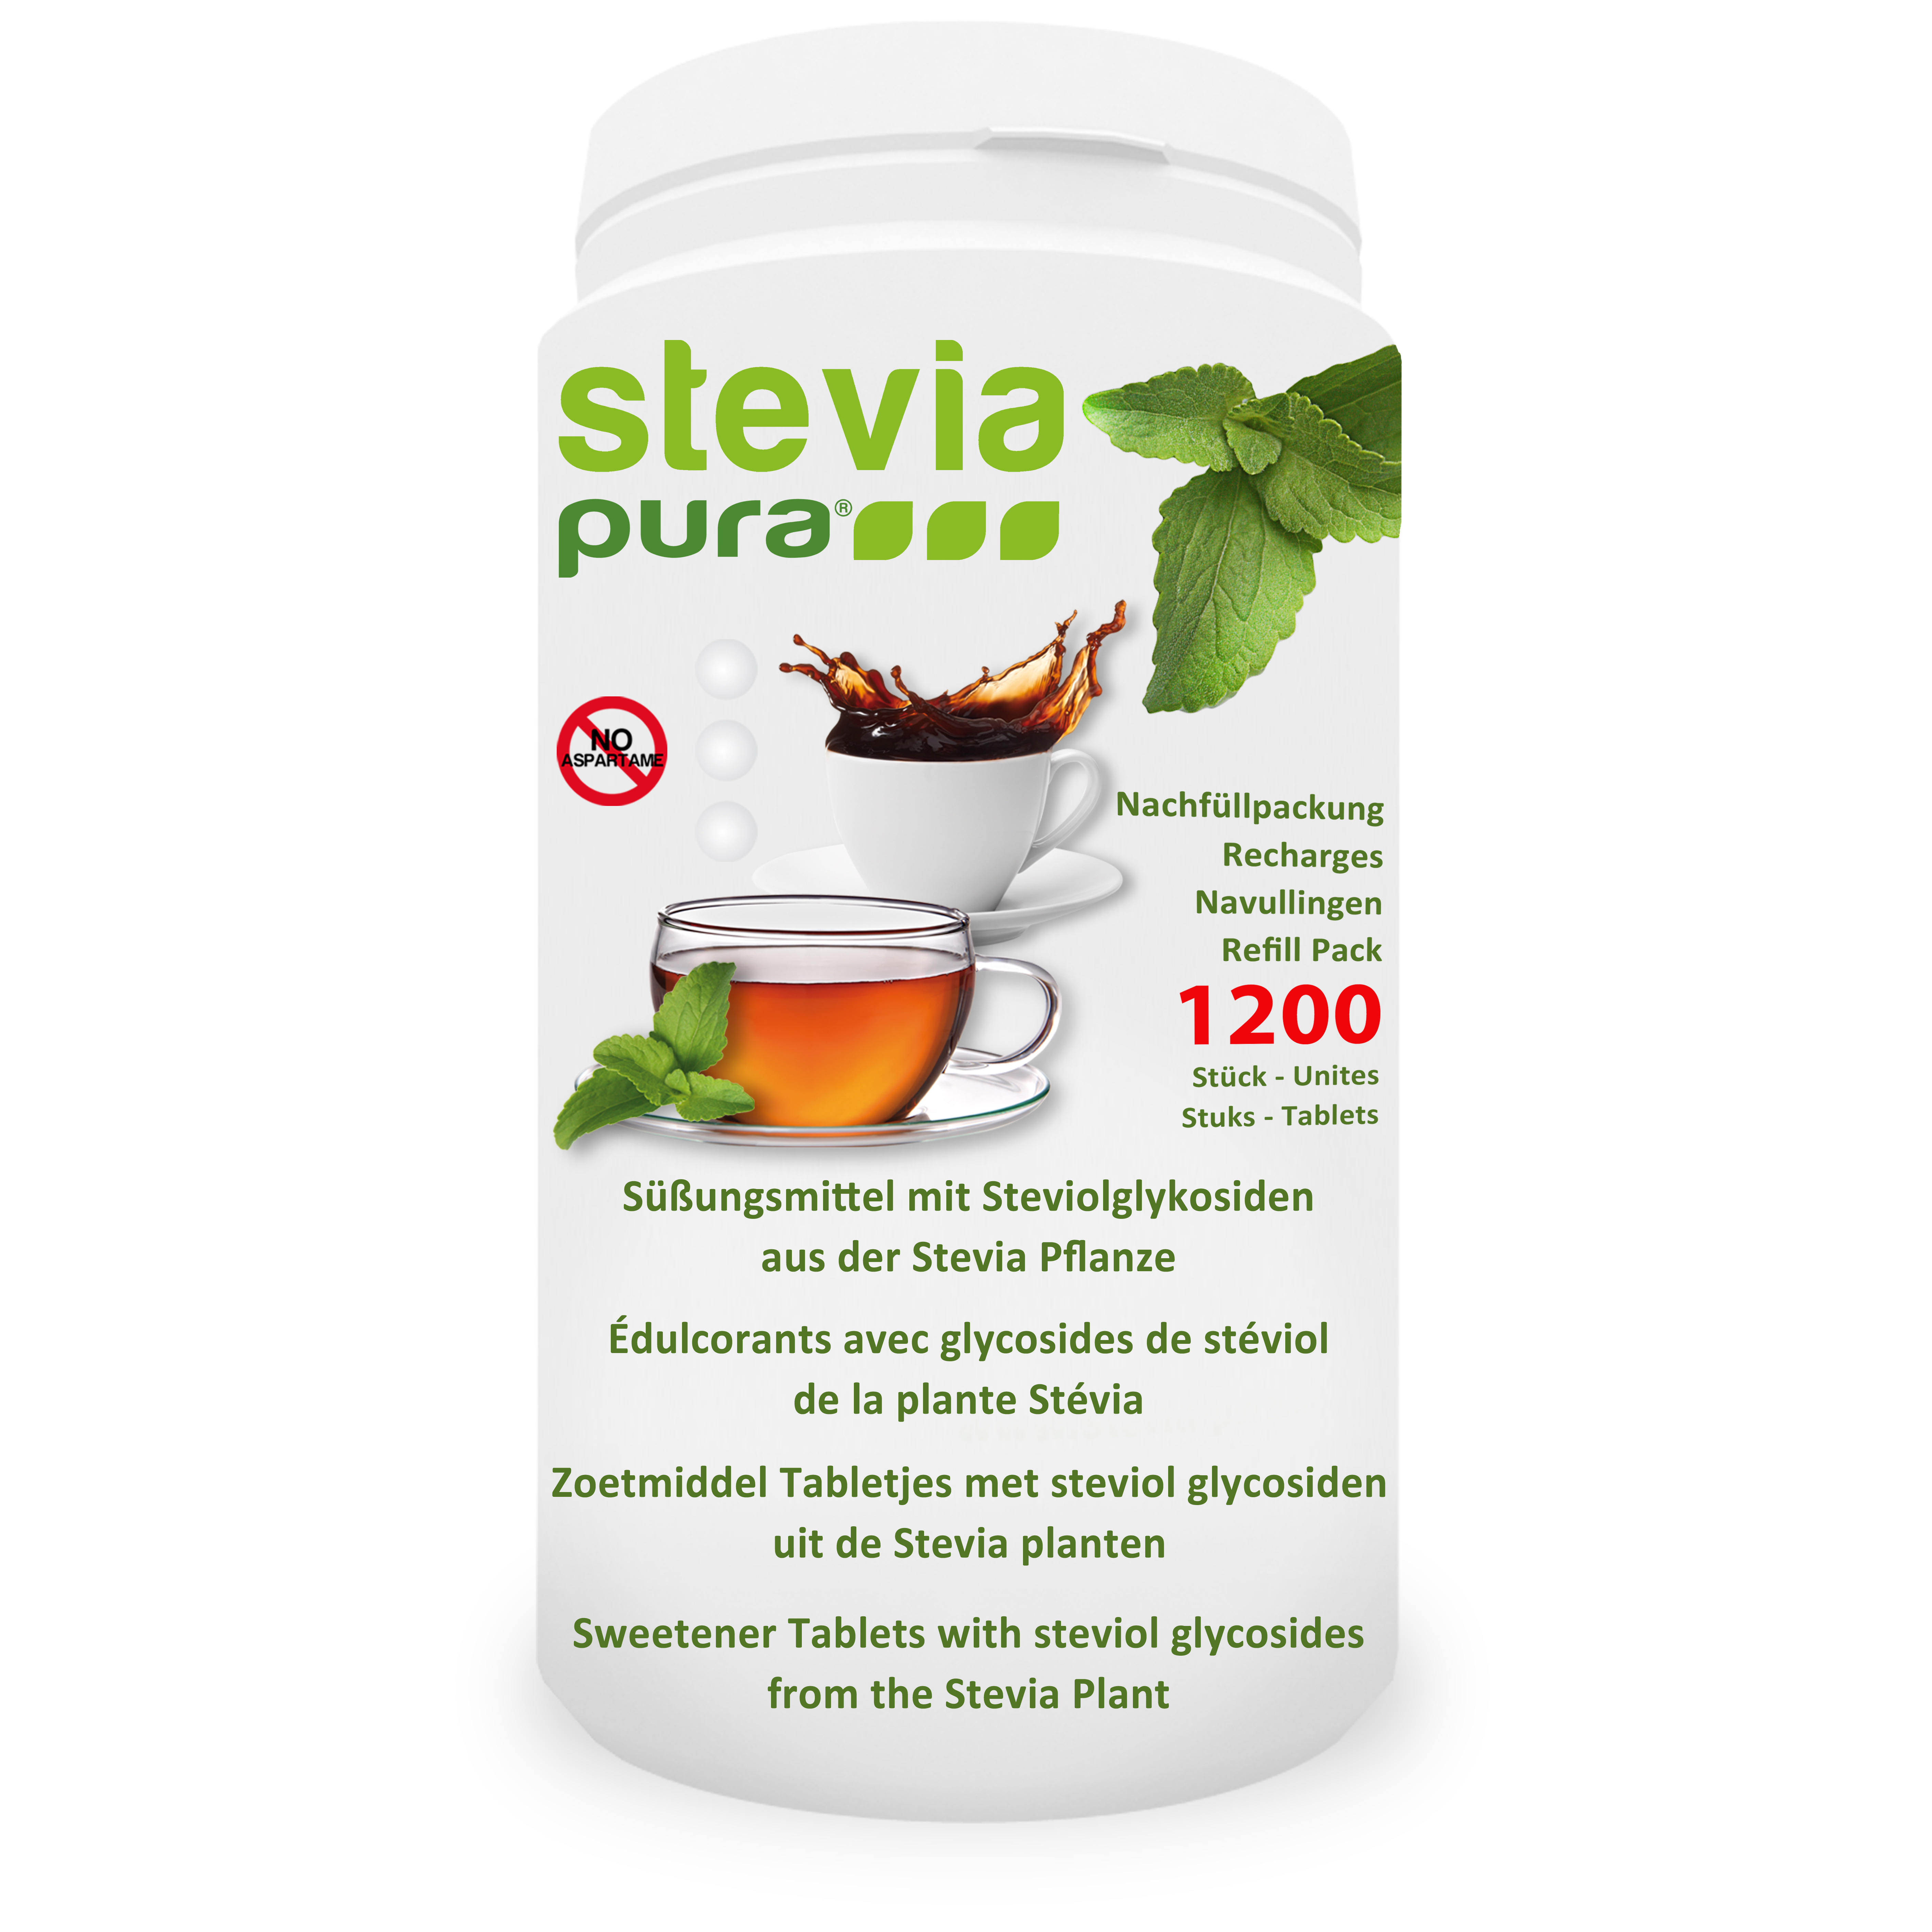 Comprar Adoçante Stevia em Comprimidos Recarga | 1200 Pastilhas de Stevia